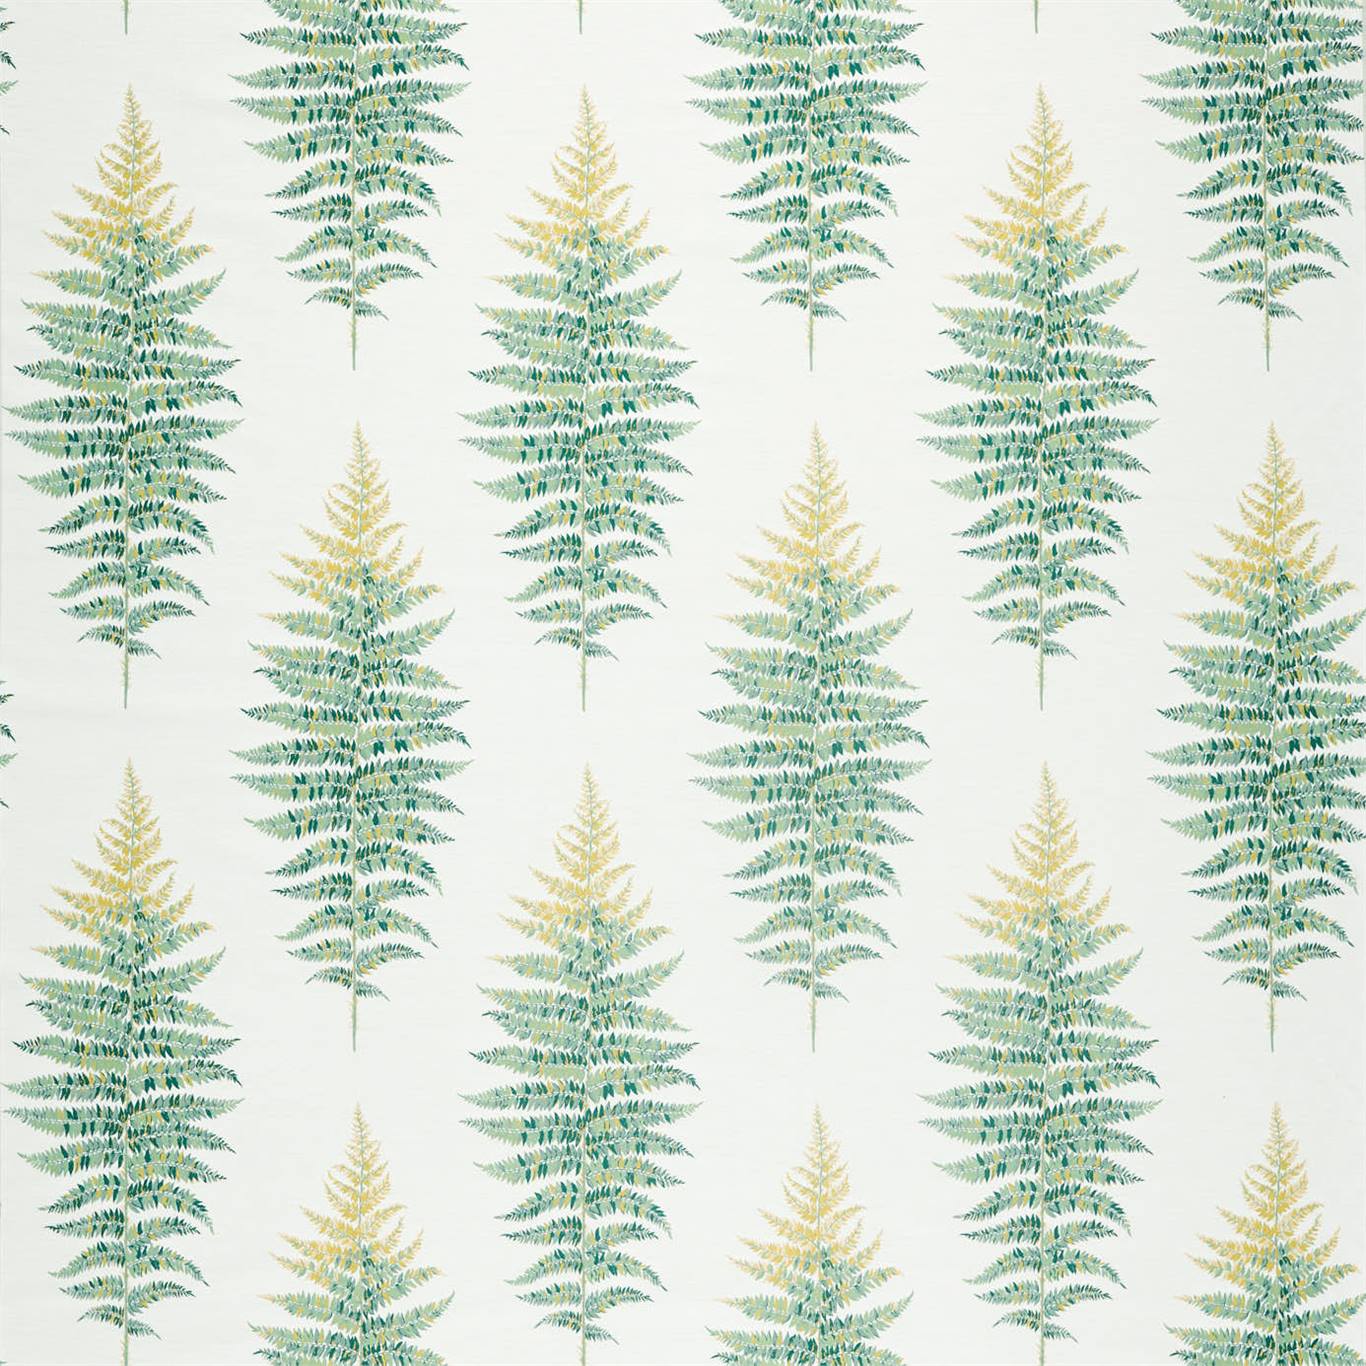 Fernery Weave Botanical Green Fabric by Sanderson